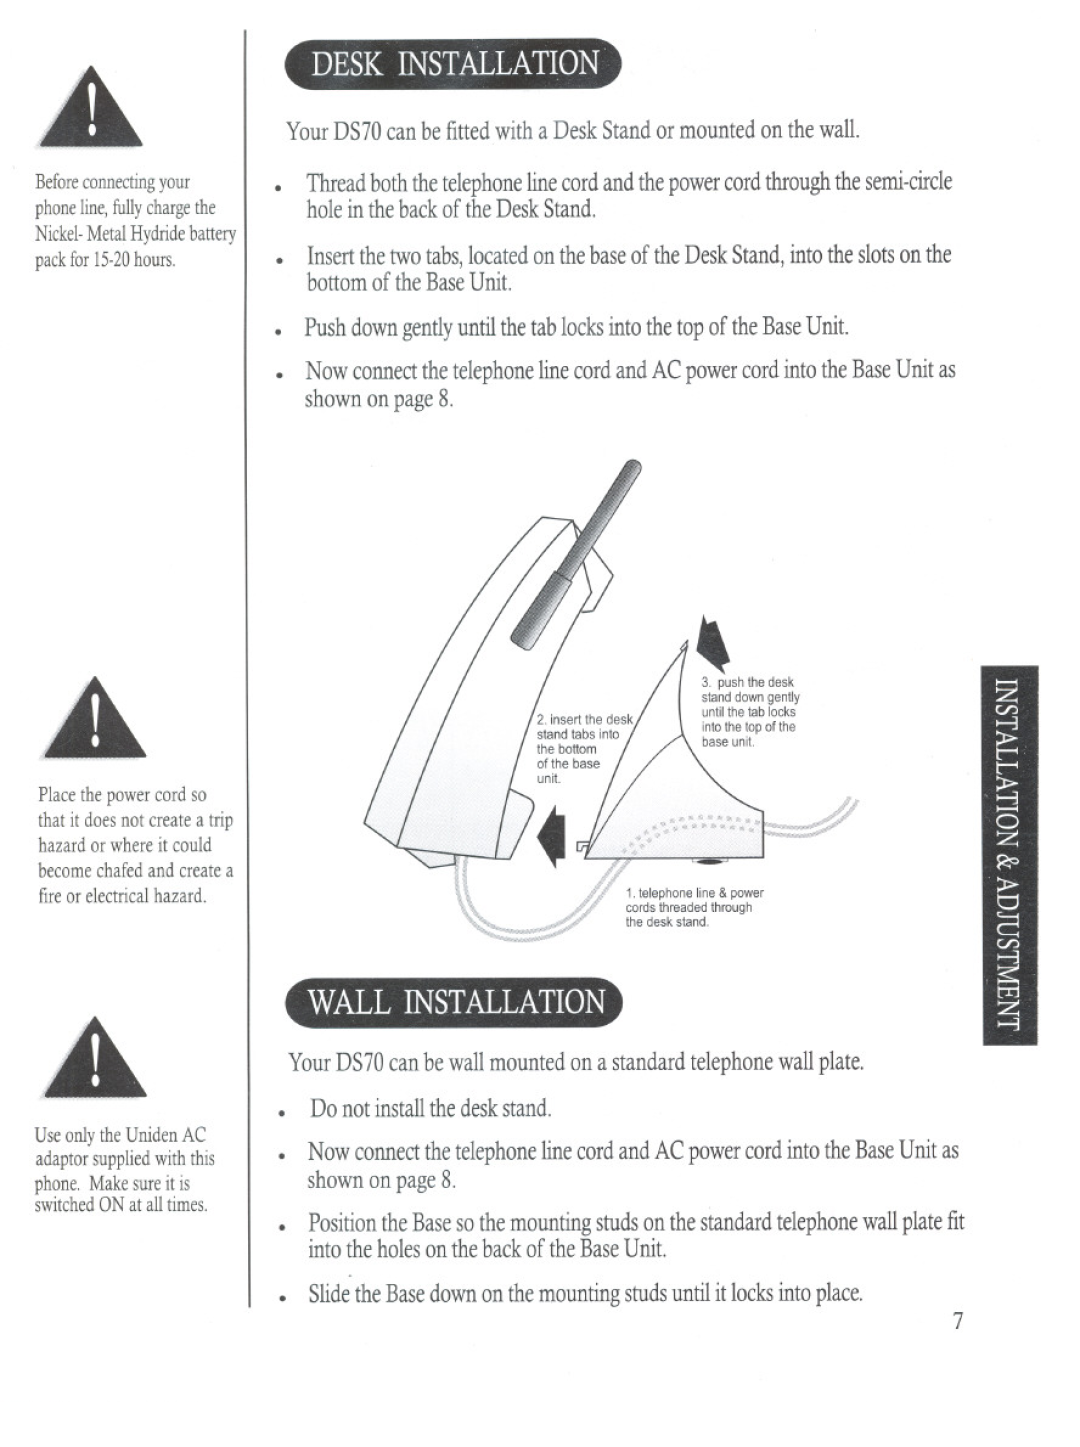 Uniden DS70 manual Wallinstallation, Desk Installation 